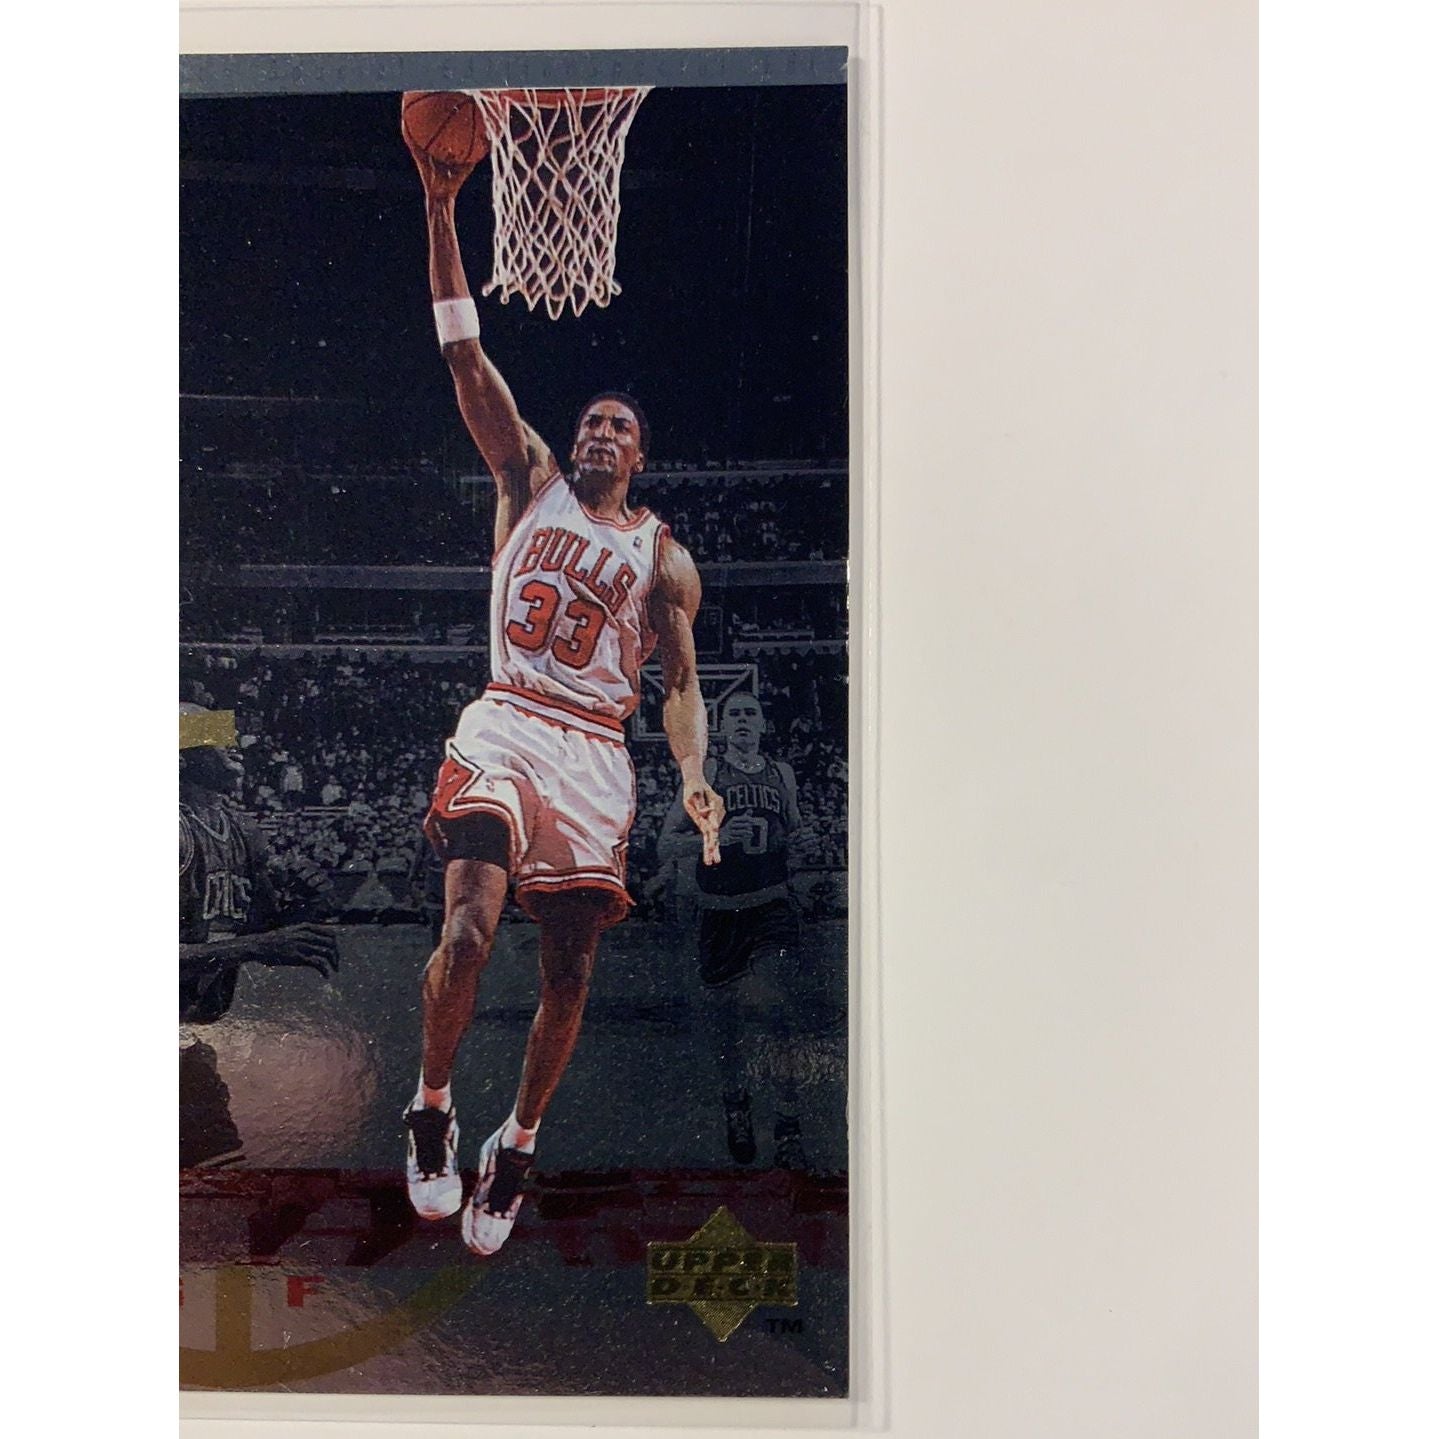  1995-96 Upper Deck Scottie Pippen Guard/Forward  Local Legends Cards & Collectibles